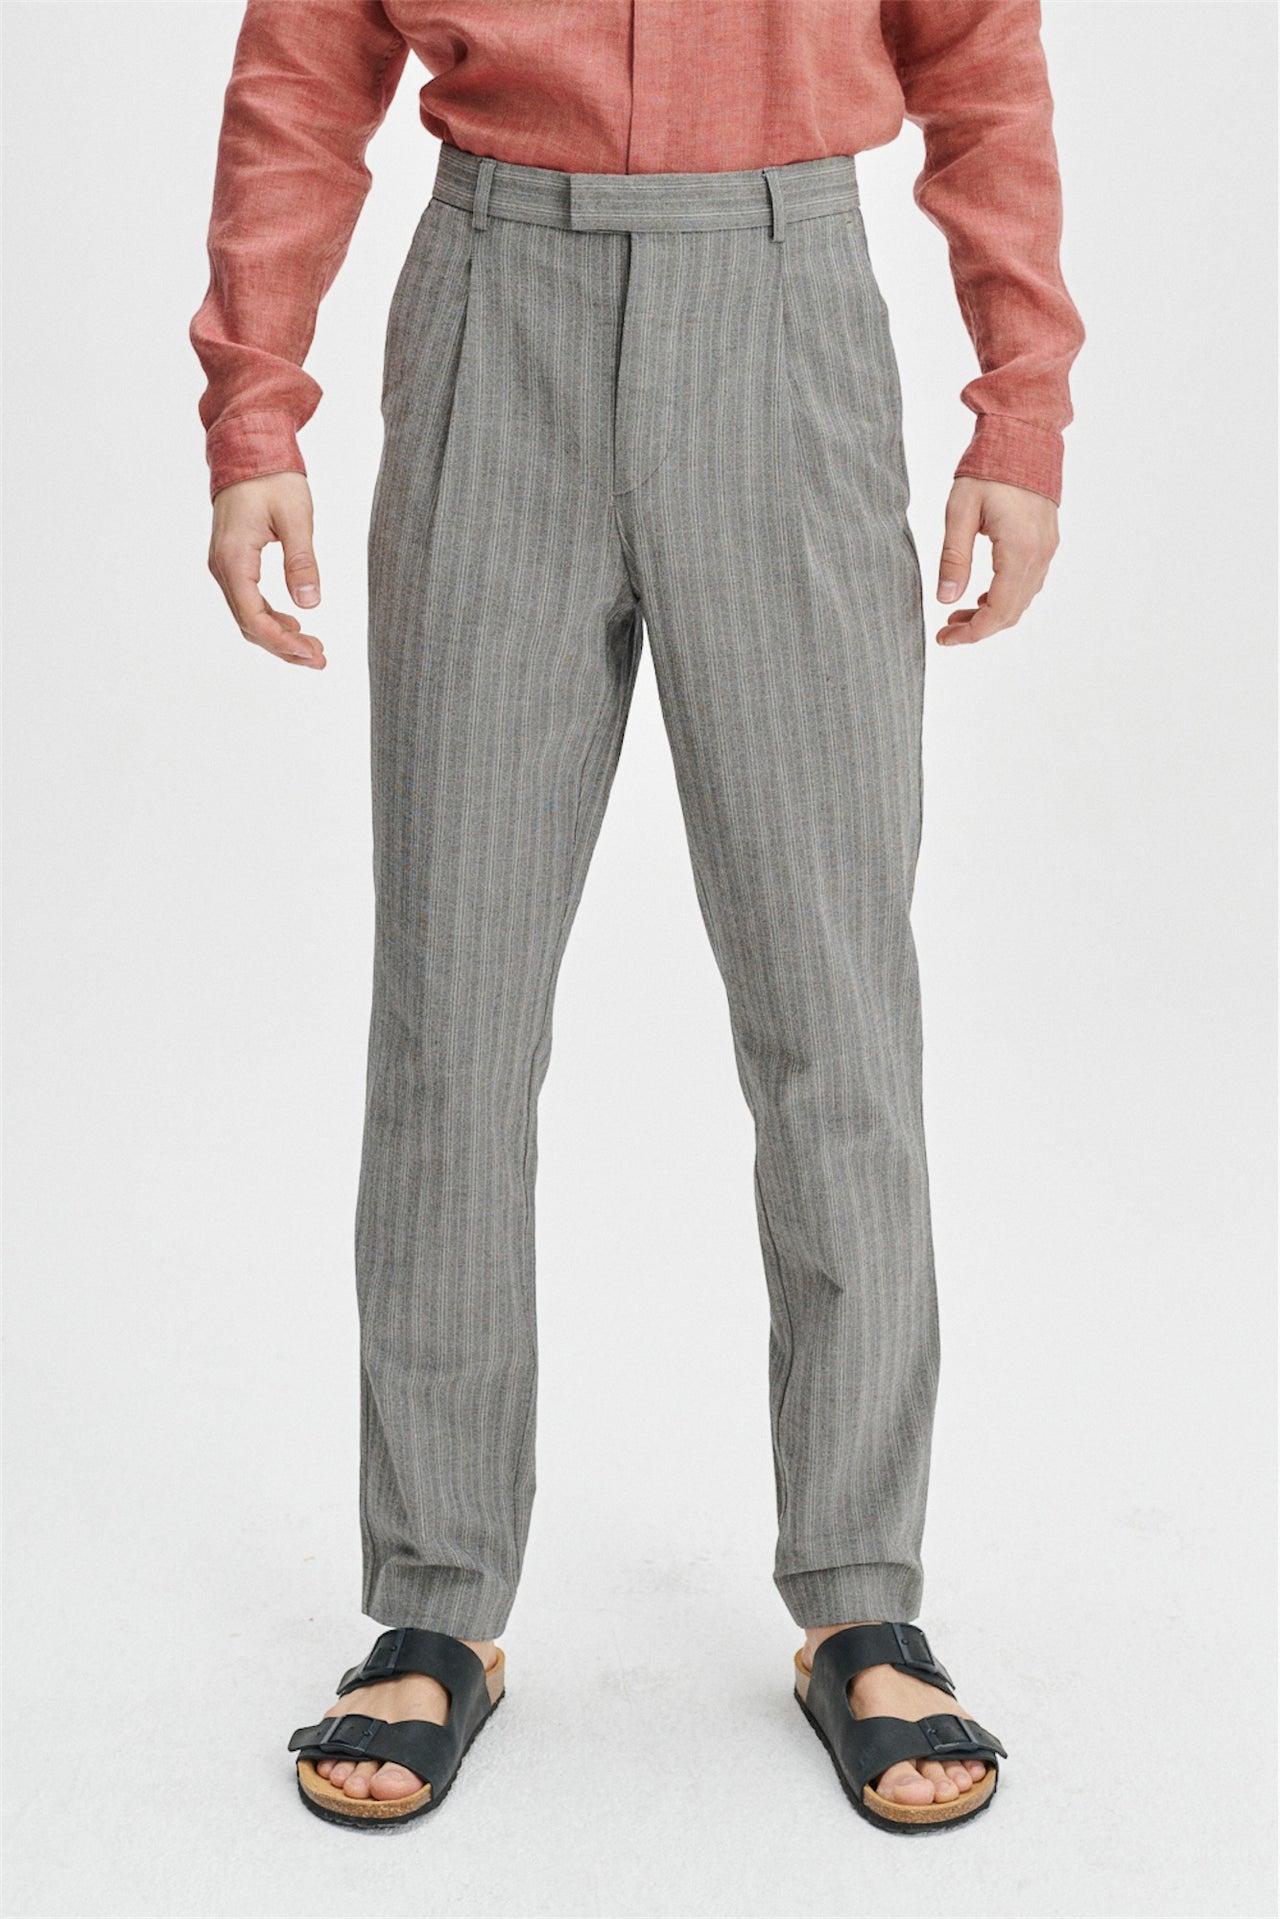 Bohemian Trousers in a Grey Herringbone and Subtle Blue Stripe Fine Italian Cotton Crepe